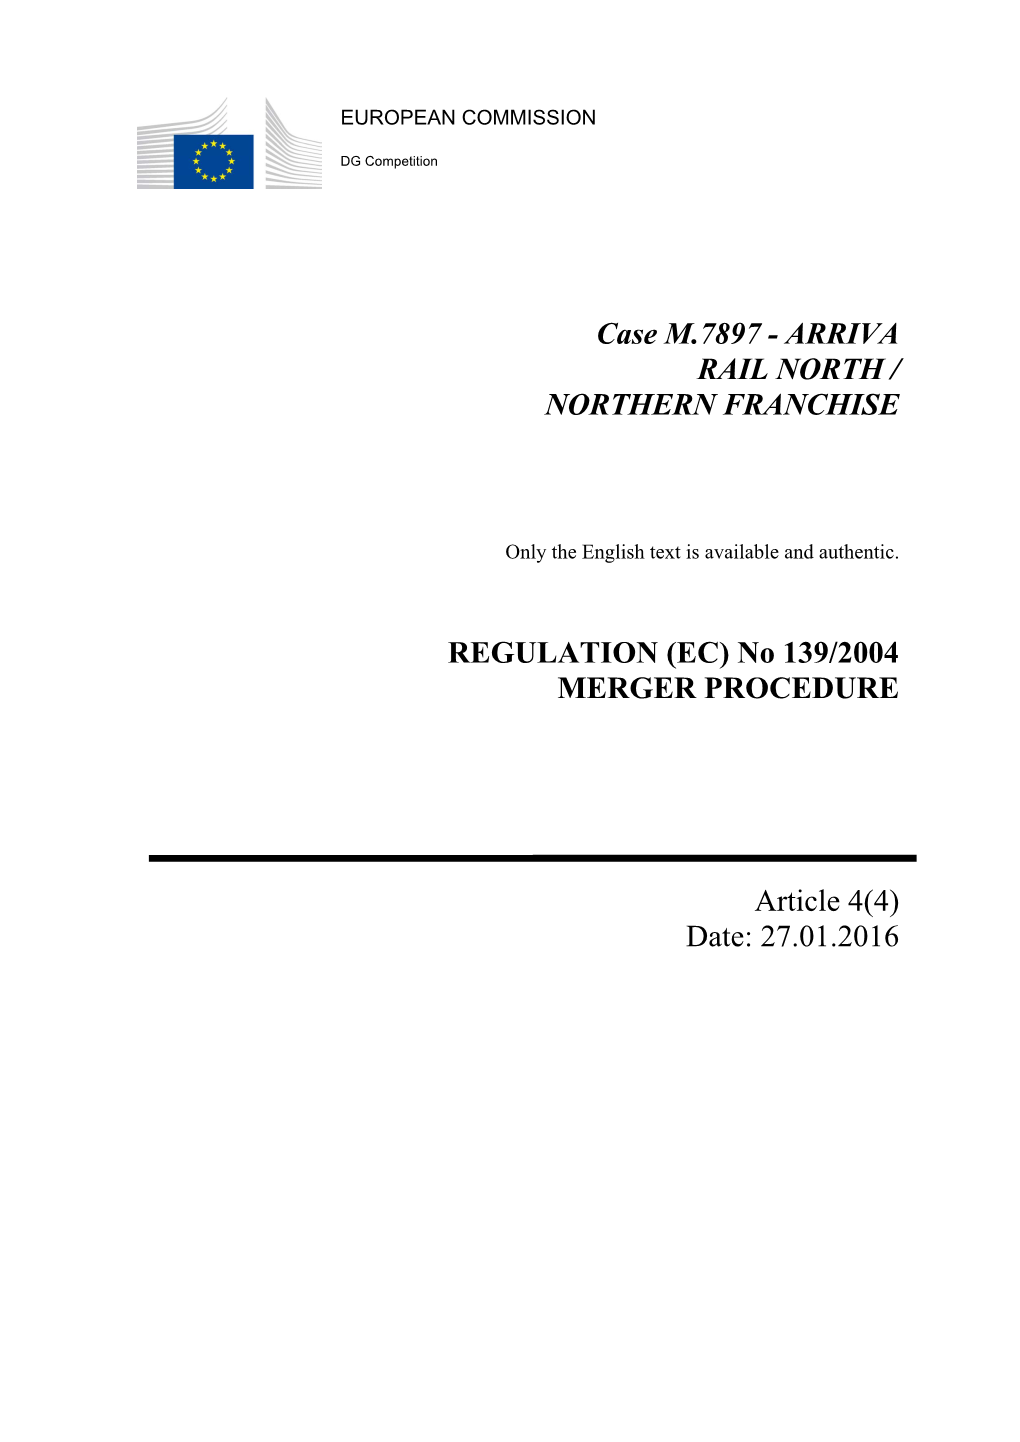 Arriva Rail North/Northern Franchise